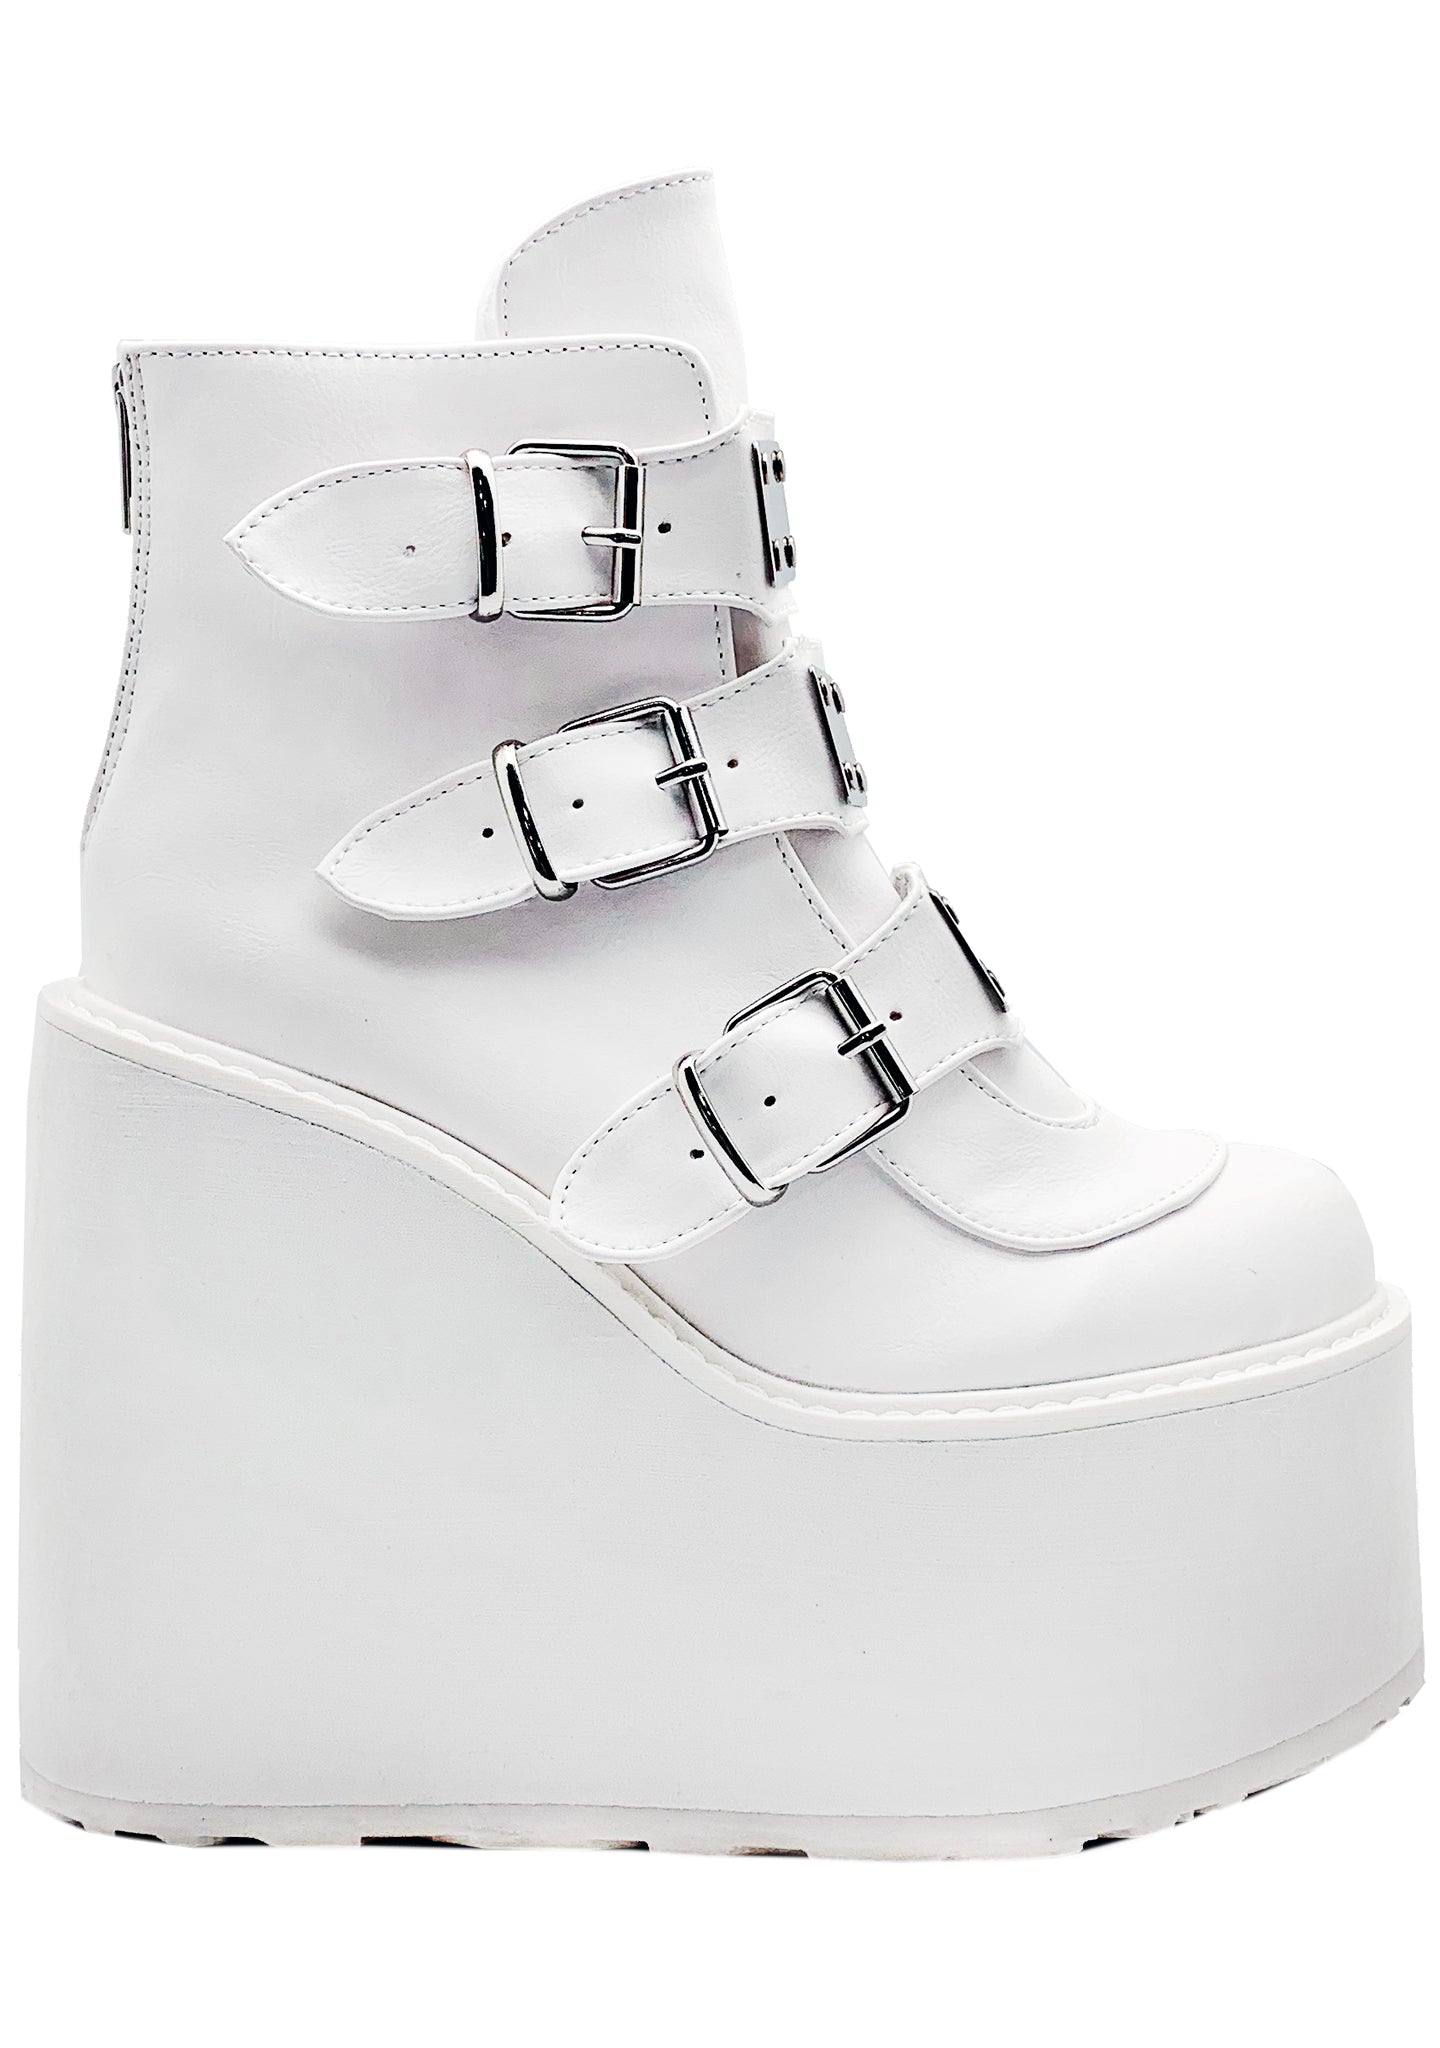 Shop Demonia Swing Strapped Platform Boots in White at LAStyleRush.com ...